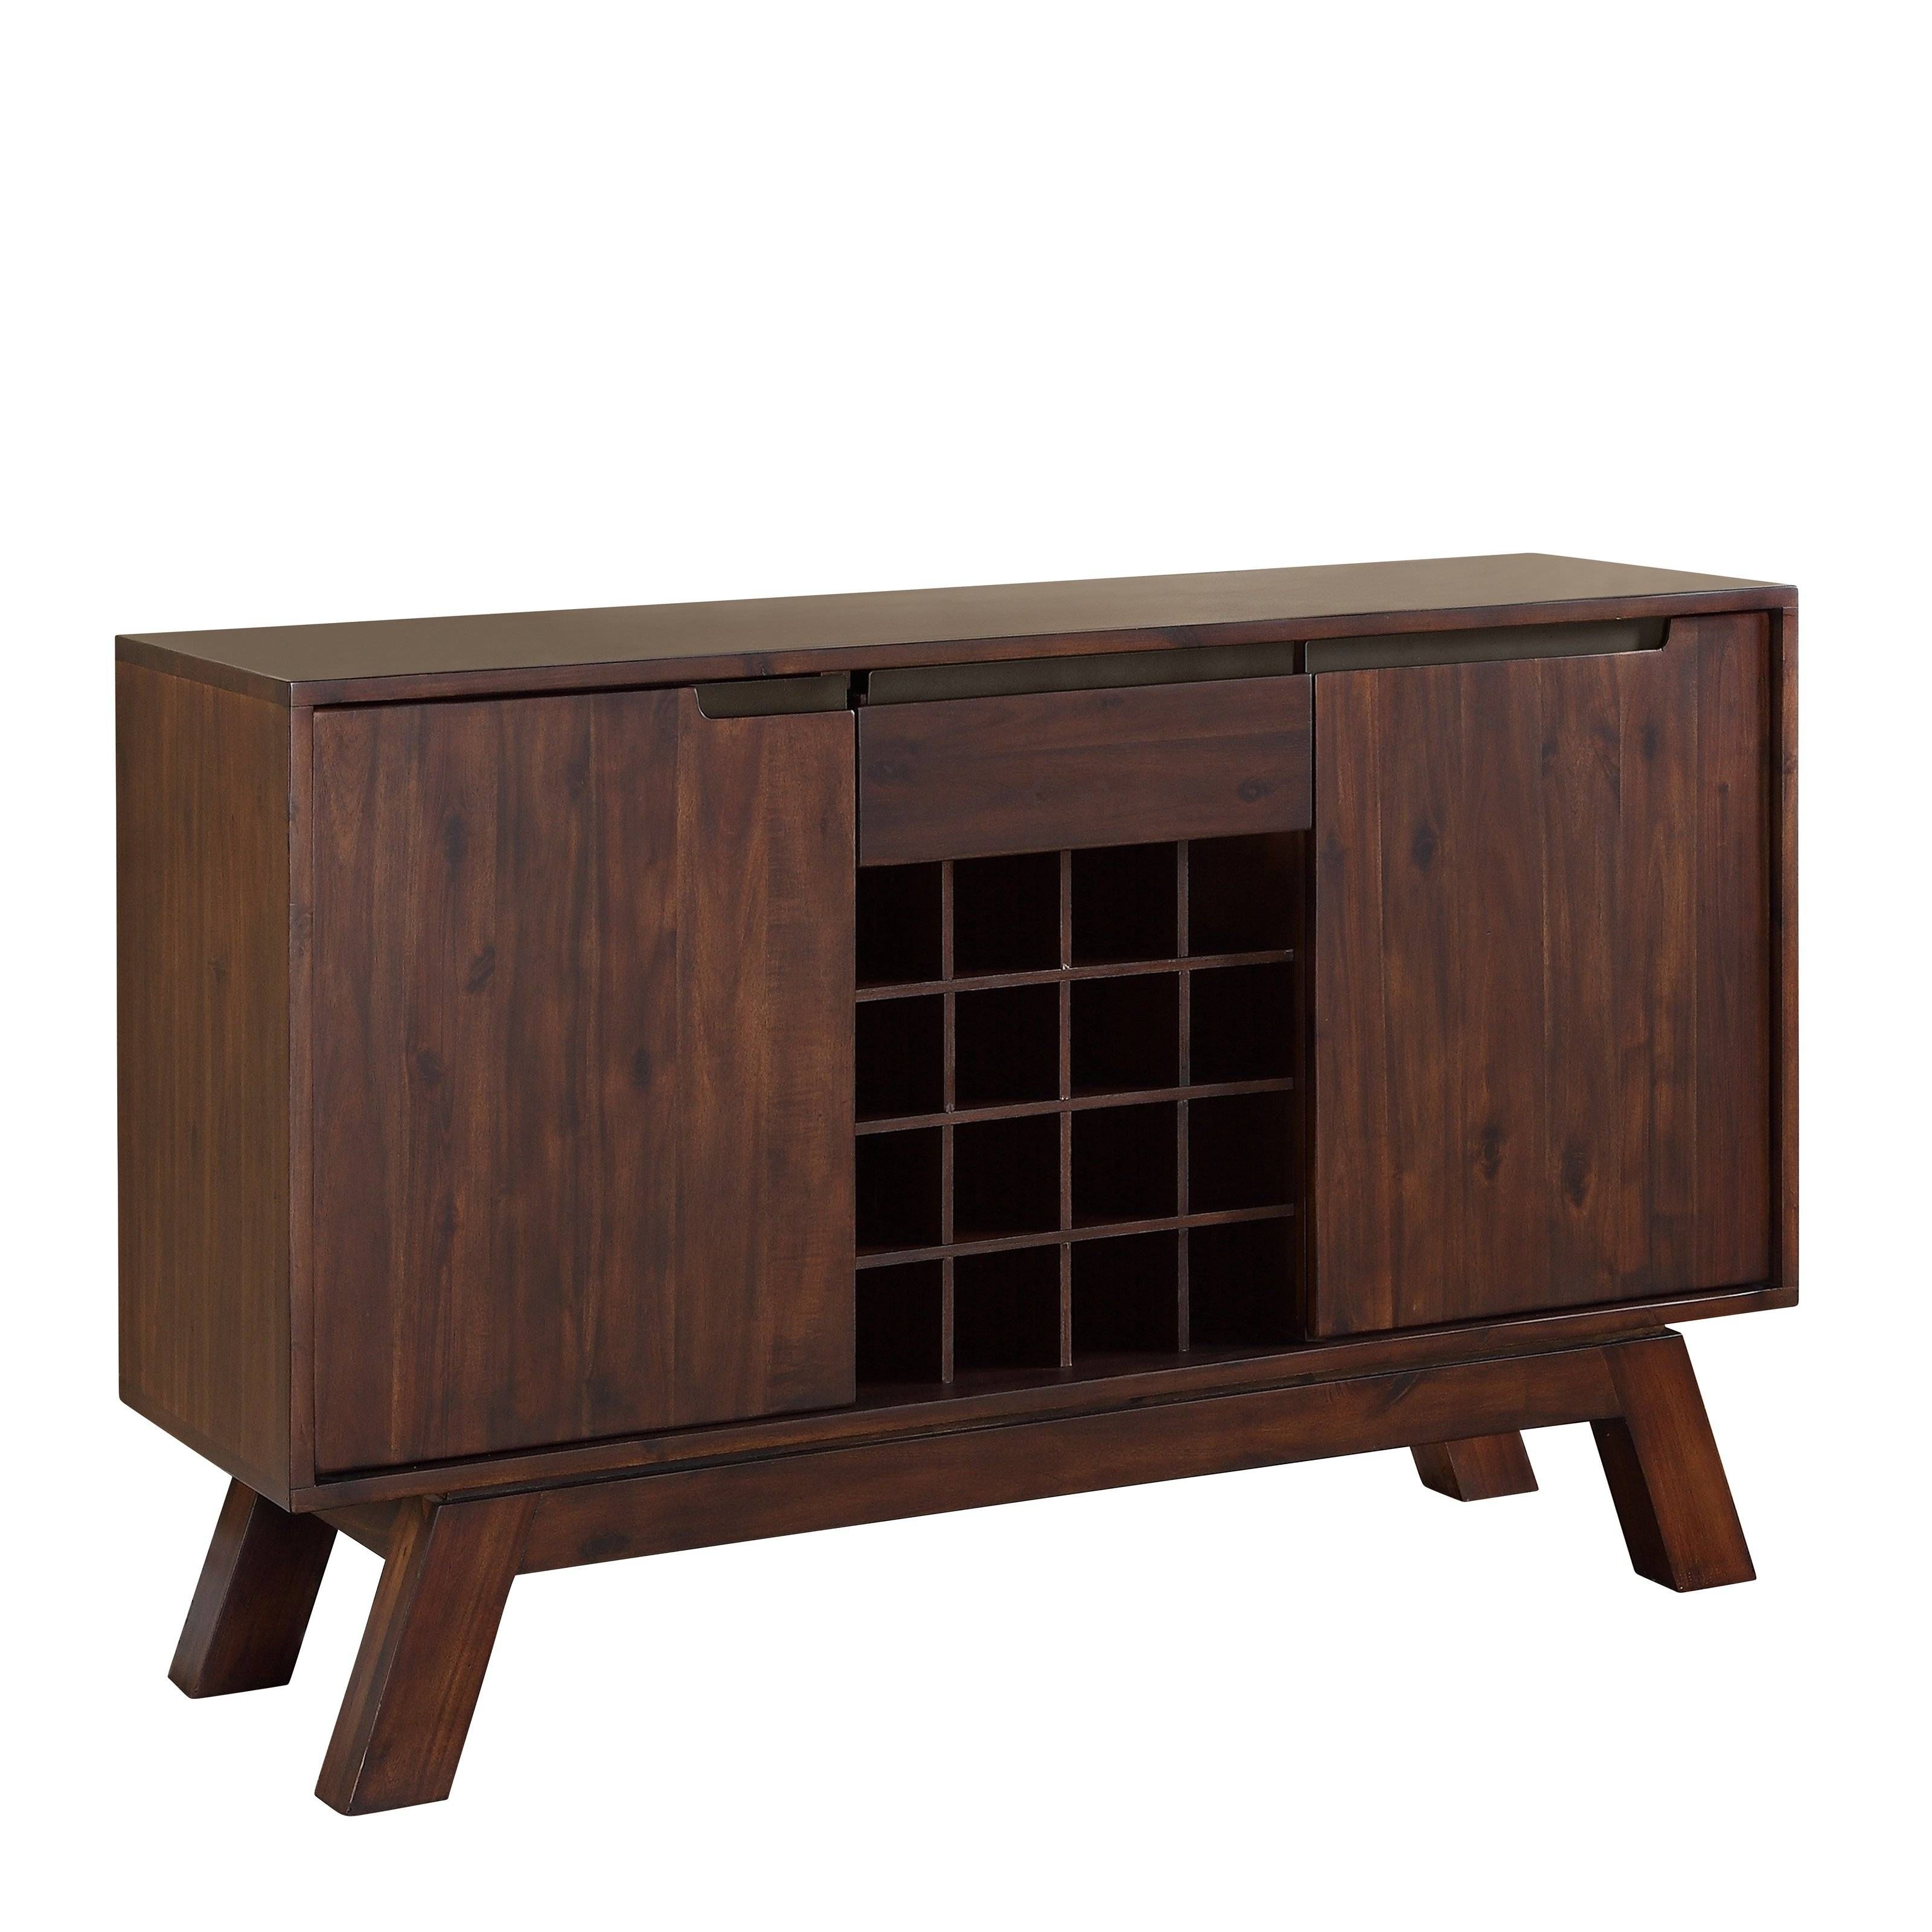 Modus Portland Solid Wood Sideboard – Medium Walnut | Hayneedle Within Latest Solid Wood Sideboards (View 9 of 15)